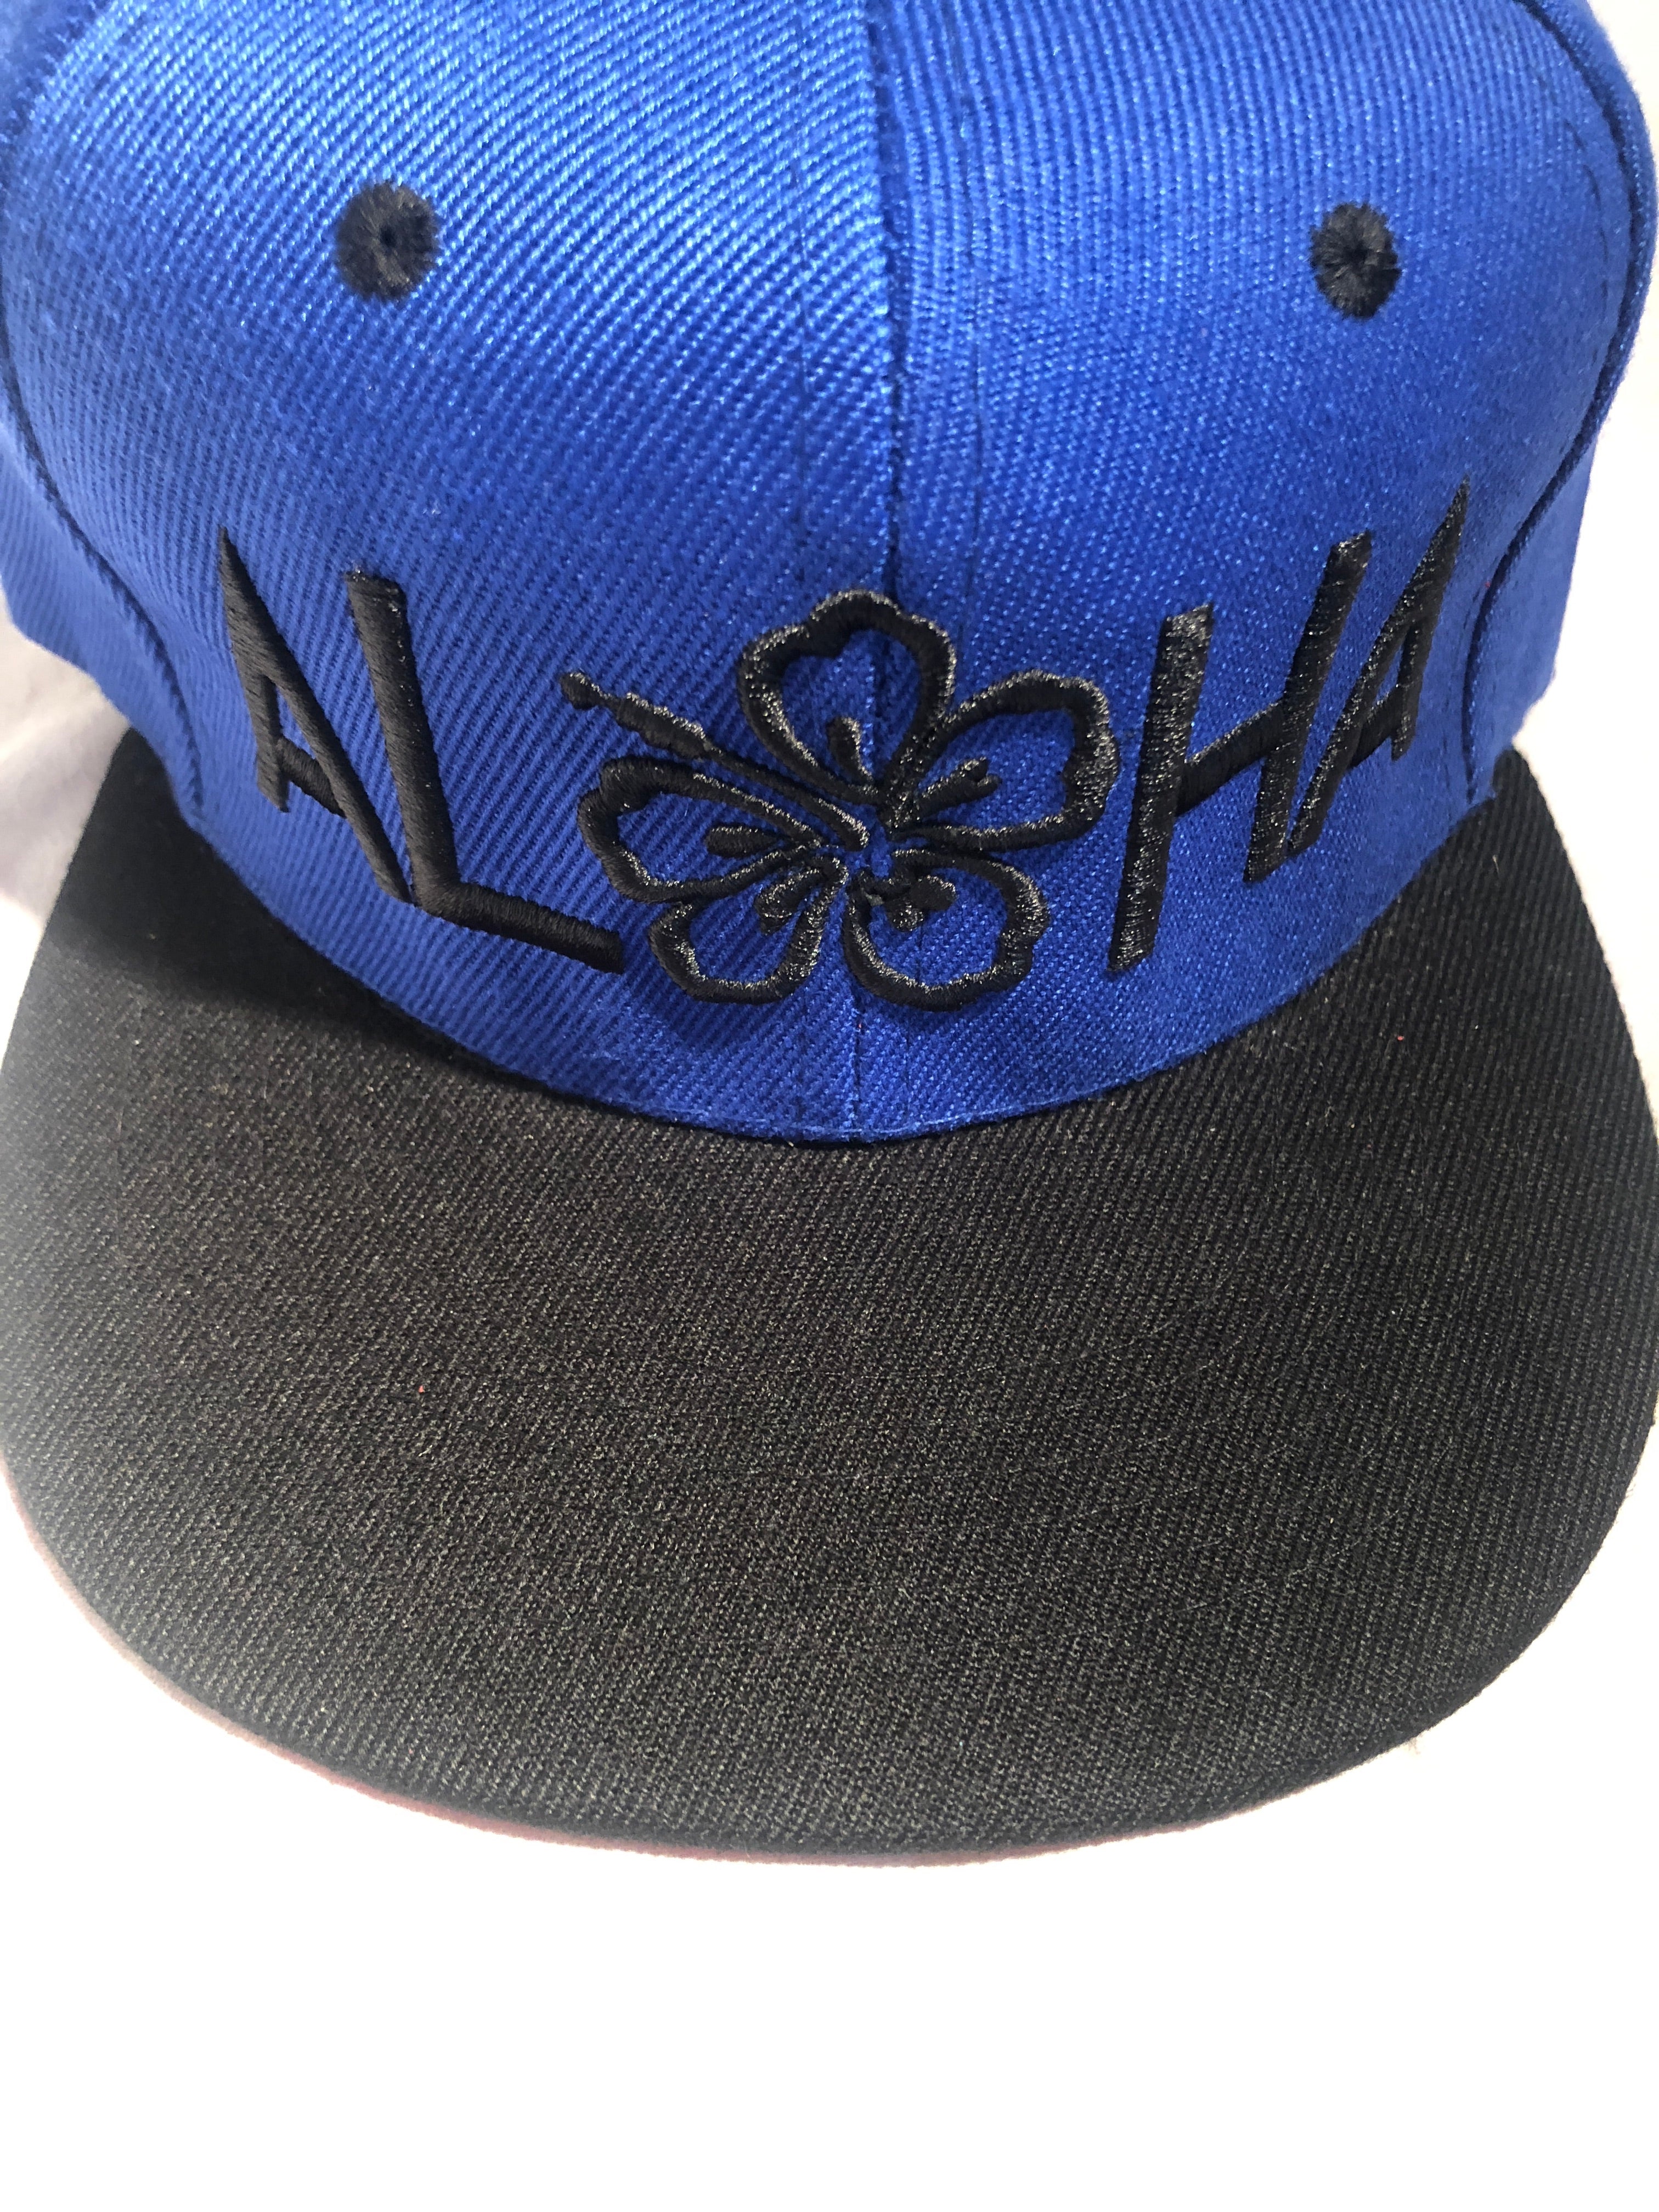 Aloha Hibiscus Youth Snapback Hats